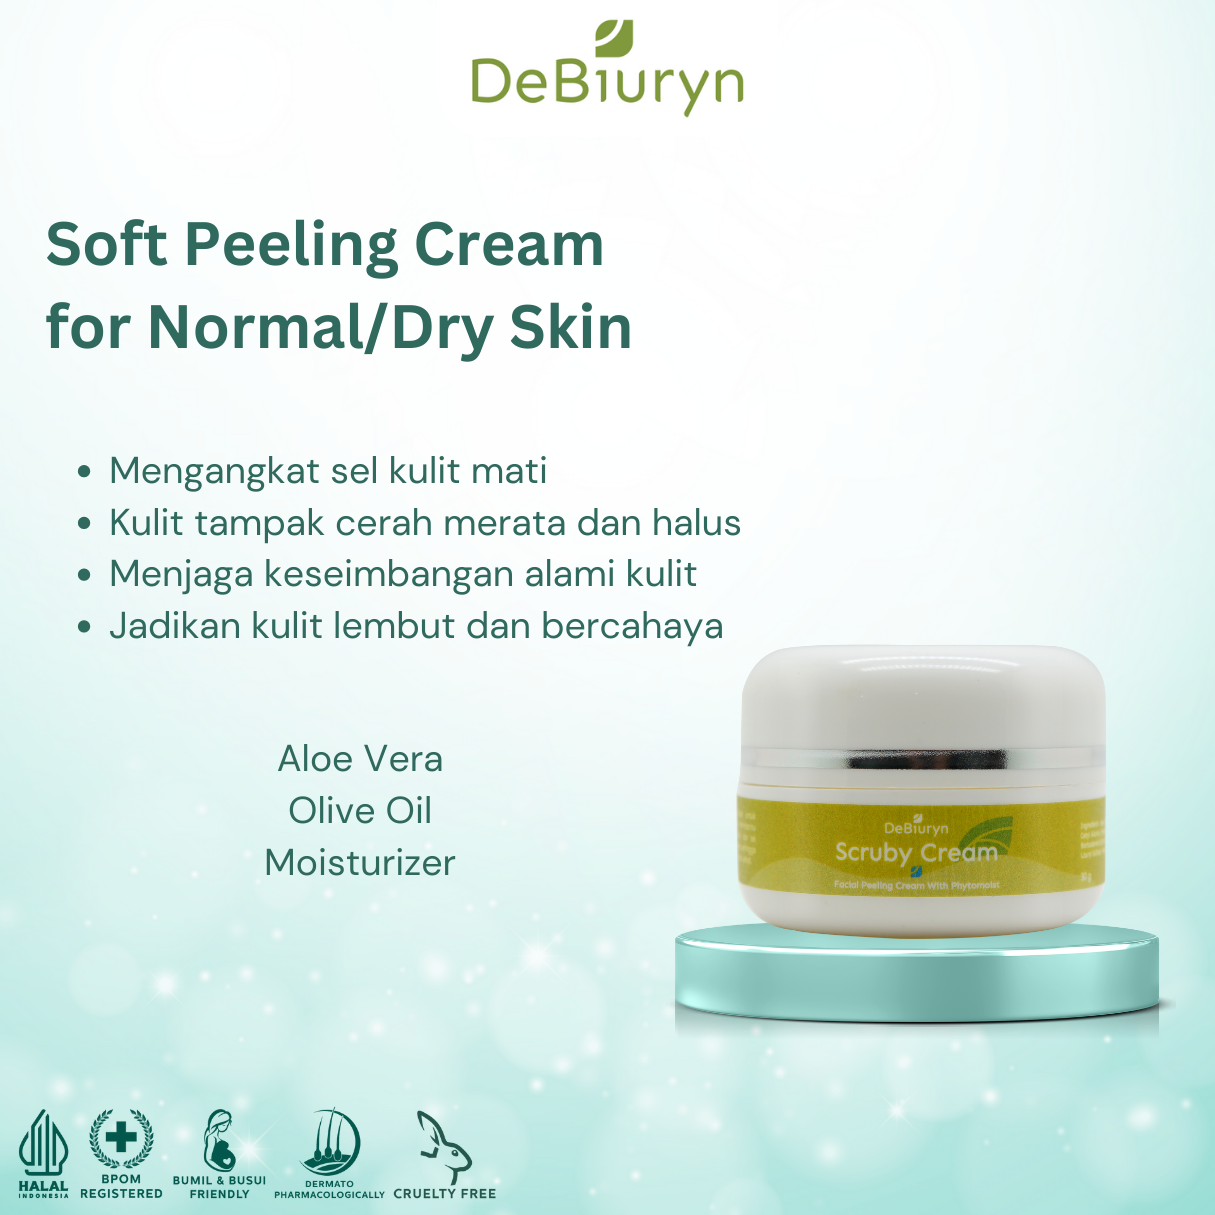 DeBiuryn Scruby Cream 30gr - Facial Peeling Scrub Kulit Normal